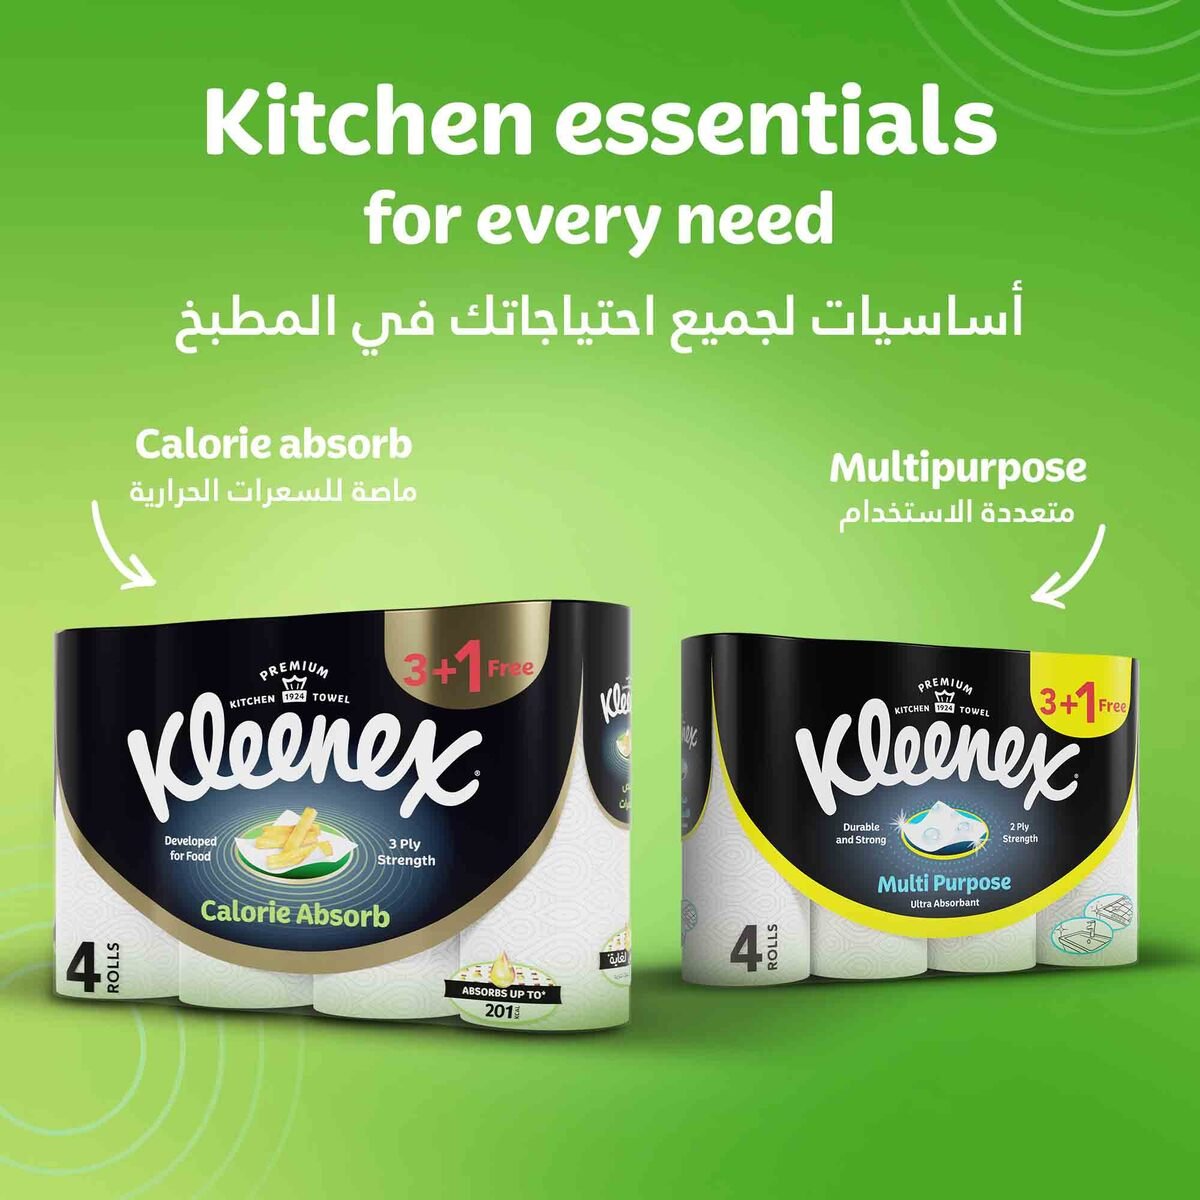 Kleenex Calorie Absorb Premium Kitchen Towel 3ply 50 Sheets